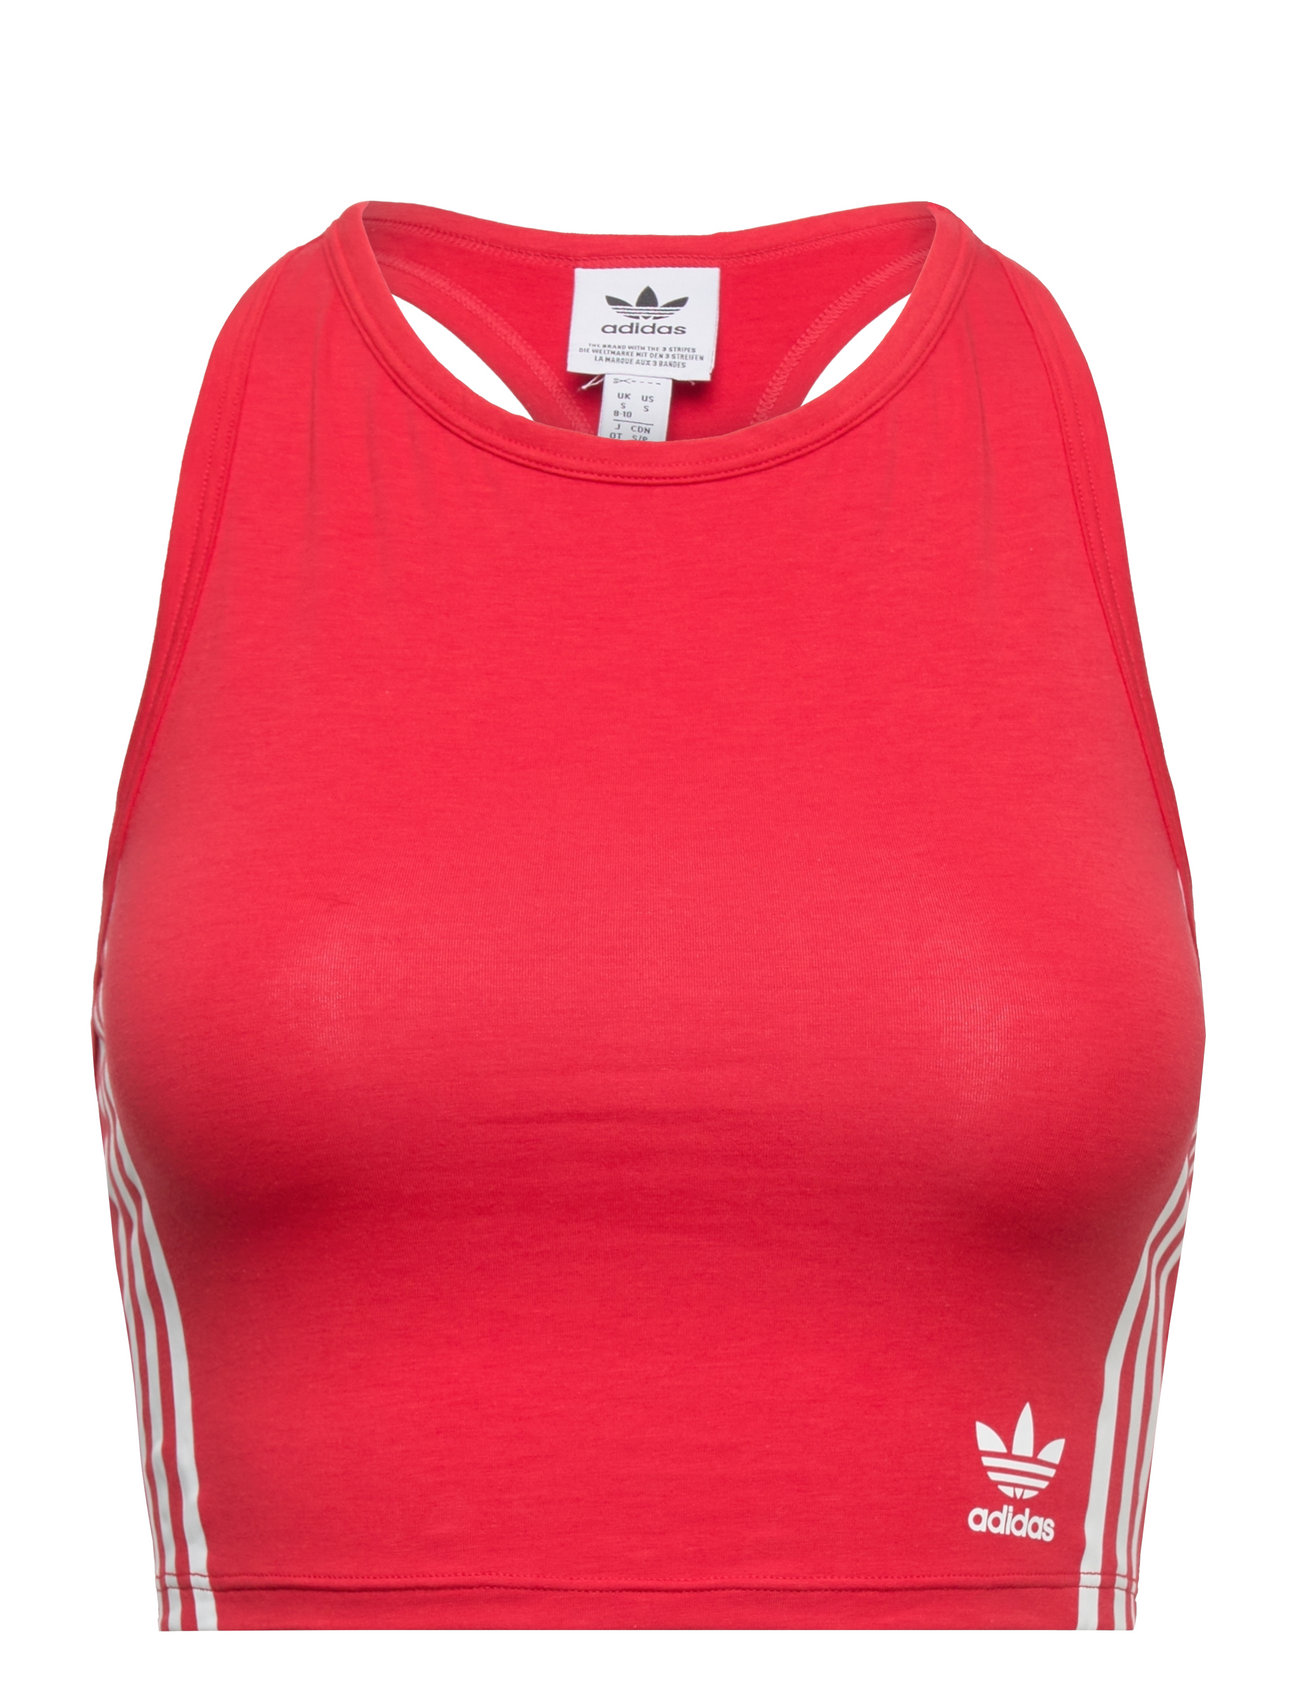 Bustier Sport Crop Tops Sleeveless Crop Tops Red Adidas Originals Underwear